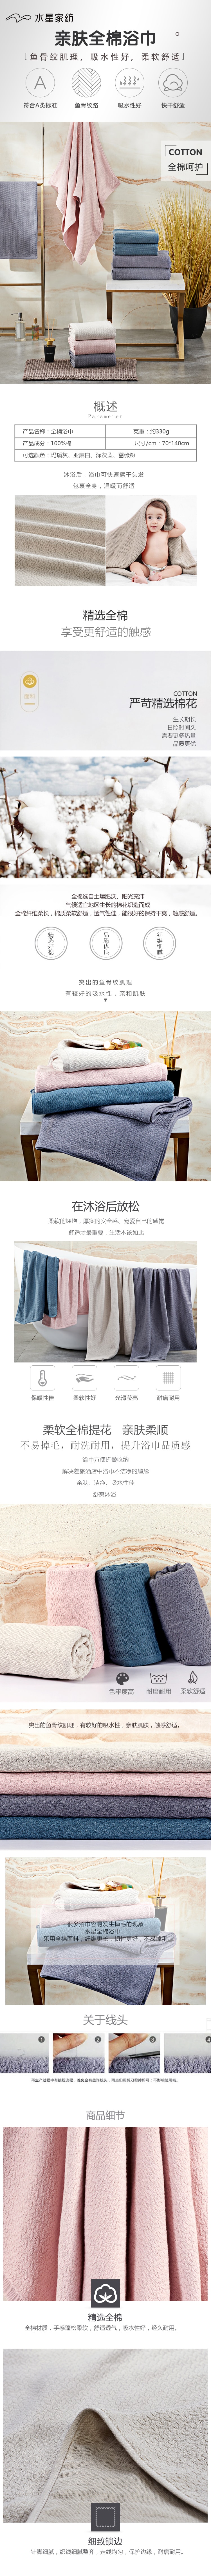 100% Cotton Bath Towel (Herringbone Pattern) - Beige